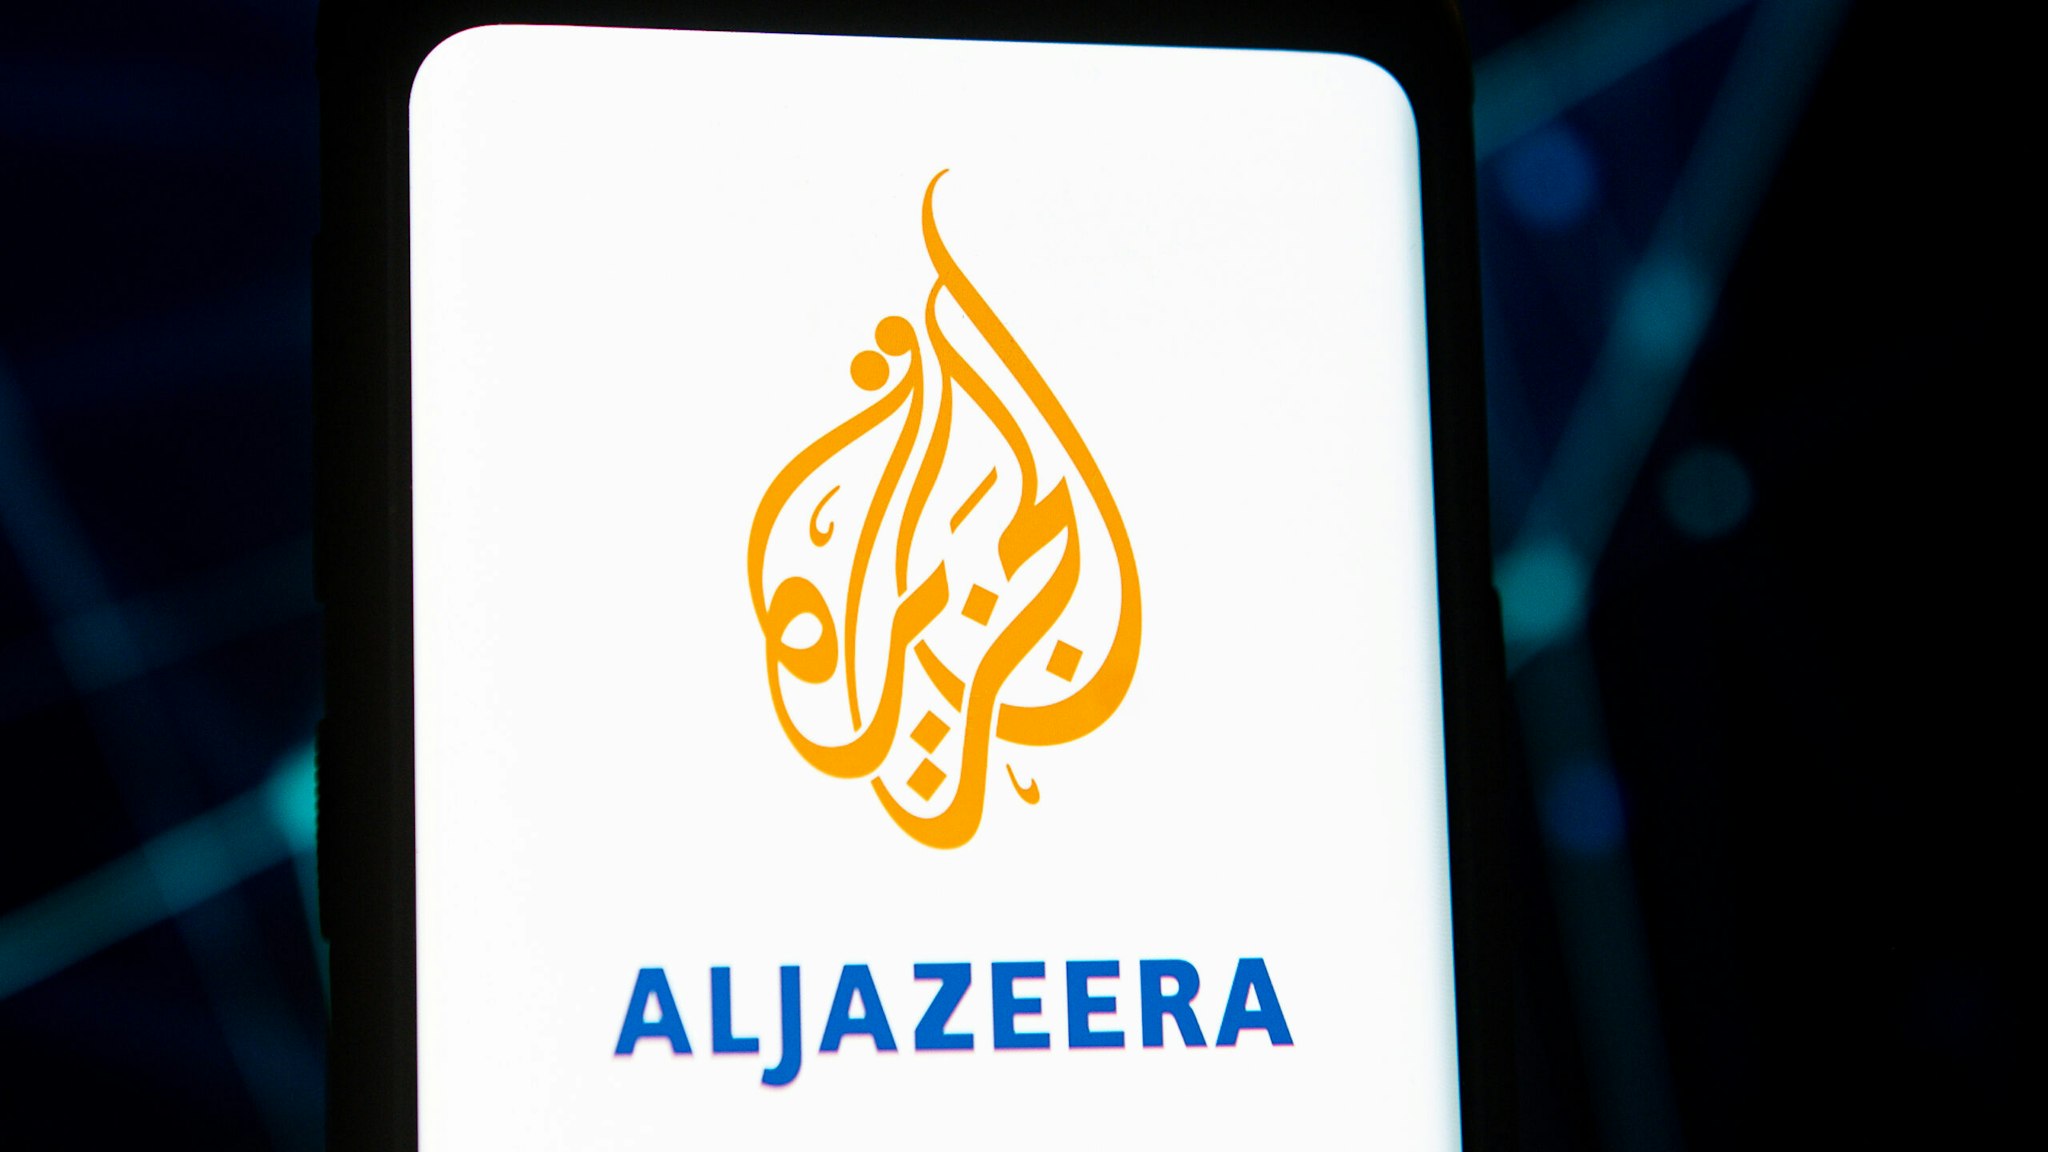 POLAND - 2020/03/23: In this photo illustration an Aljazeera logo seen displayed on a smartphone.